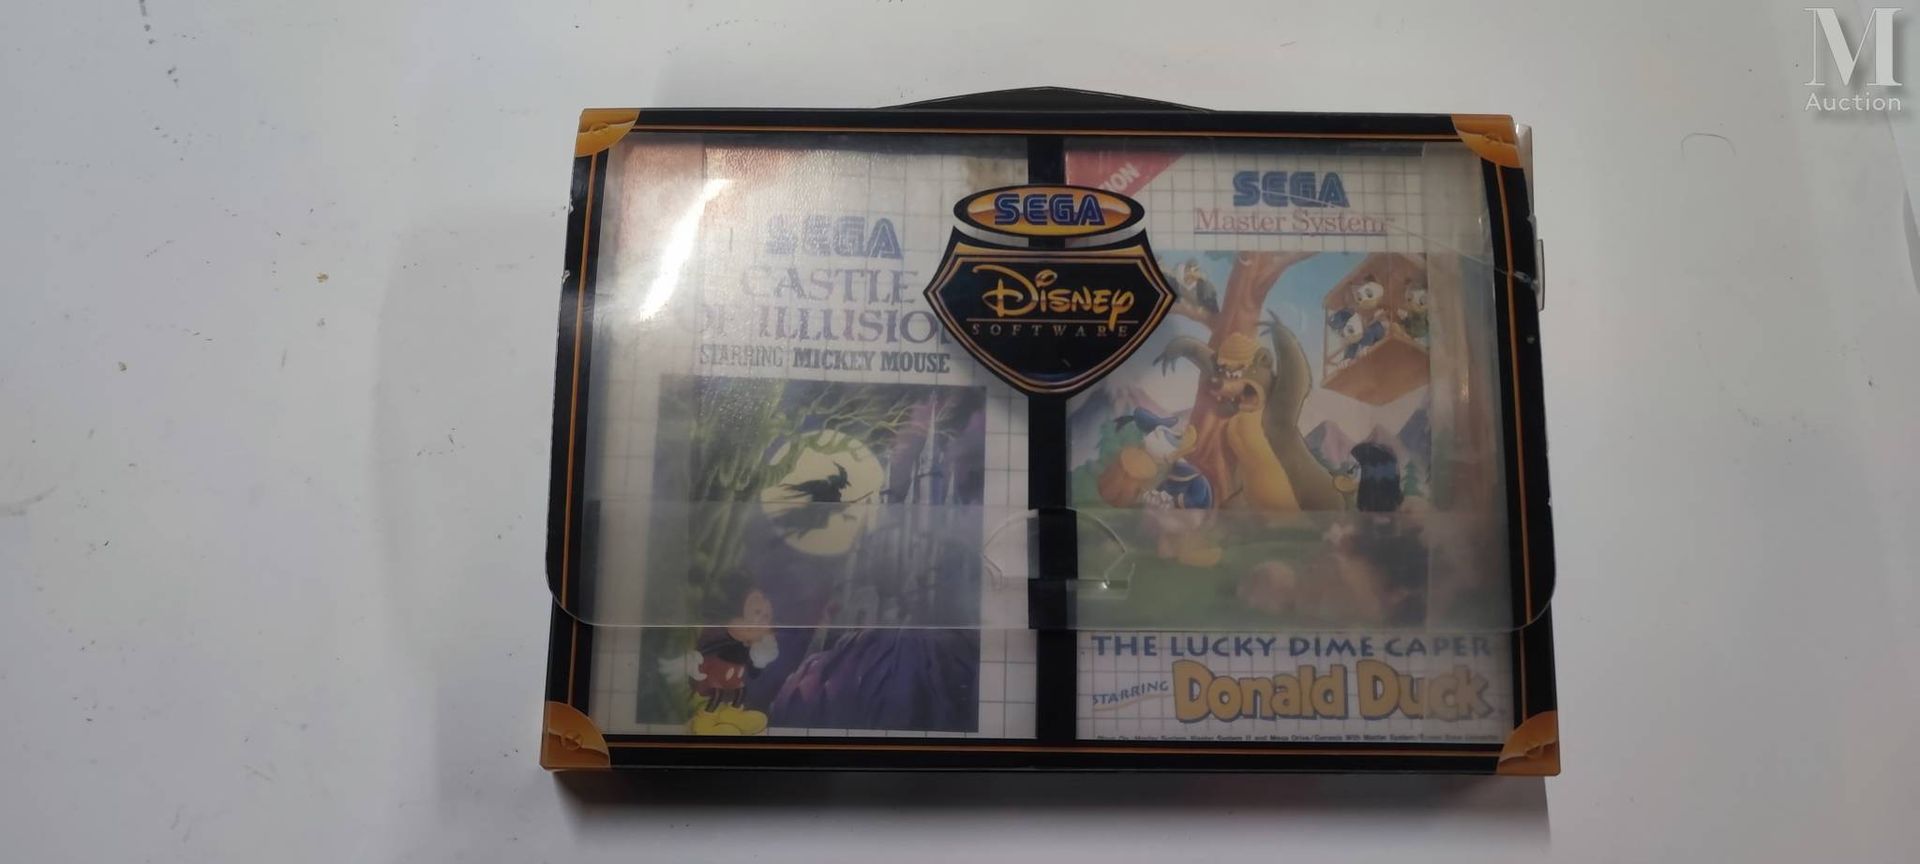 SEGA DISNEY SOFTWARE PACK 世嘉迪斯尼软件包

罕见的迪斯尼限量版盒子，用于世嘉主系统（PAL），包含两个游戏：唐老鸭主演的《幸运一角钱&hellip;